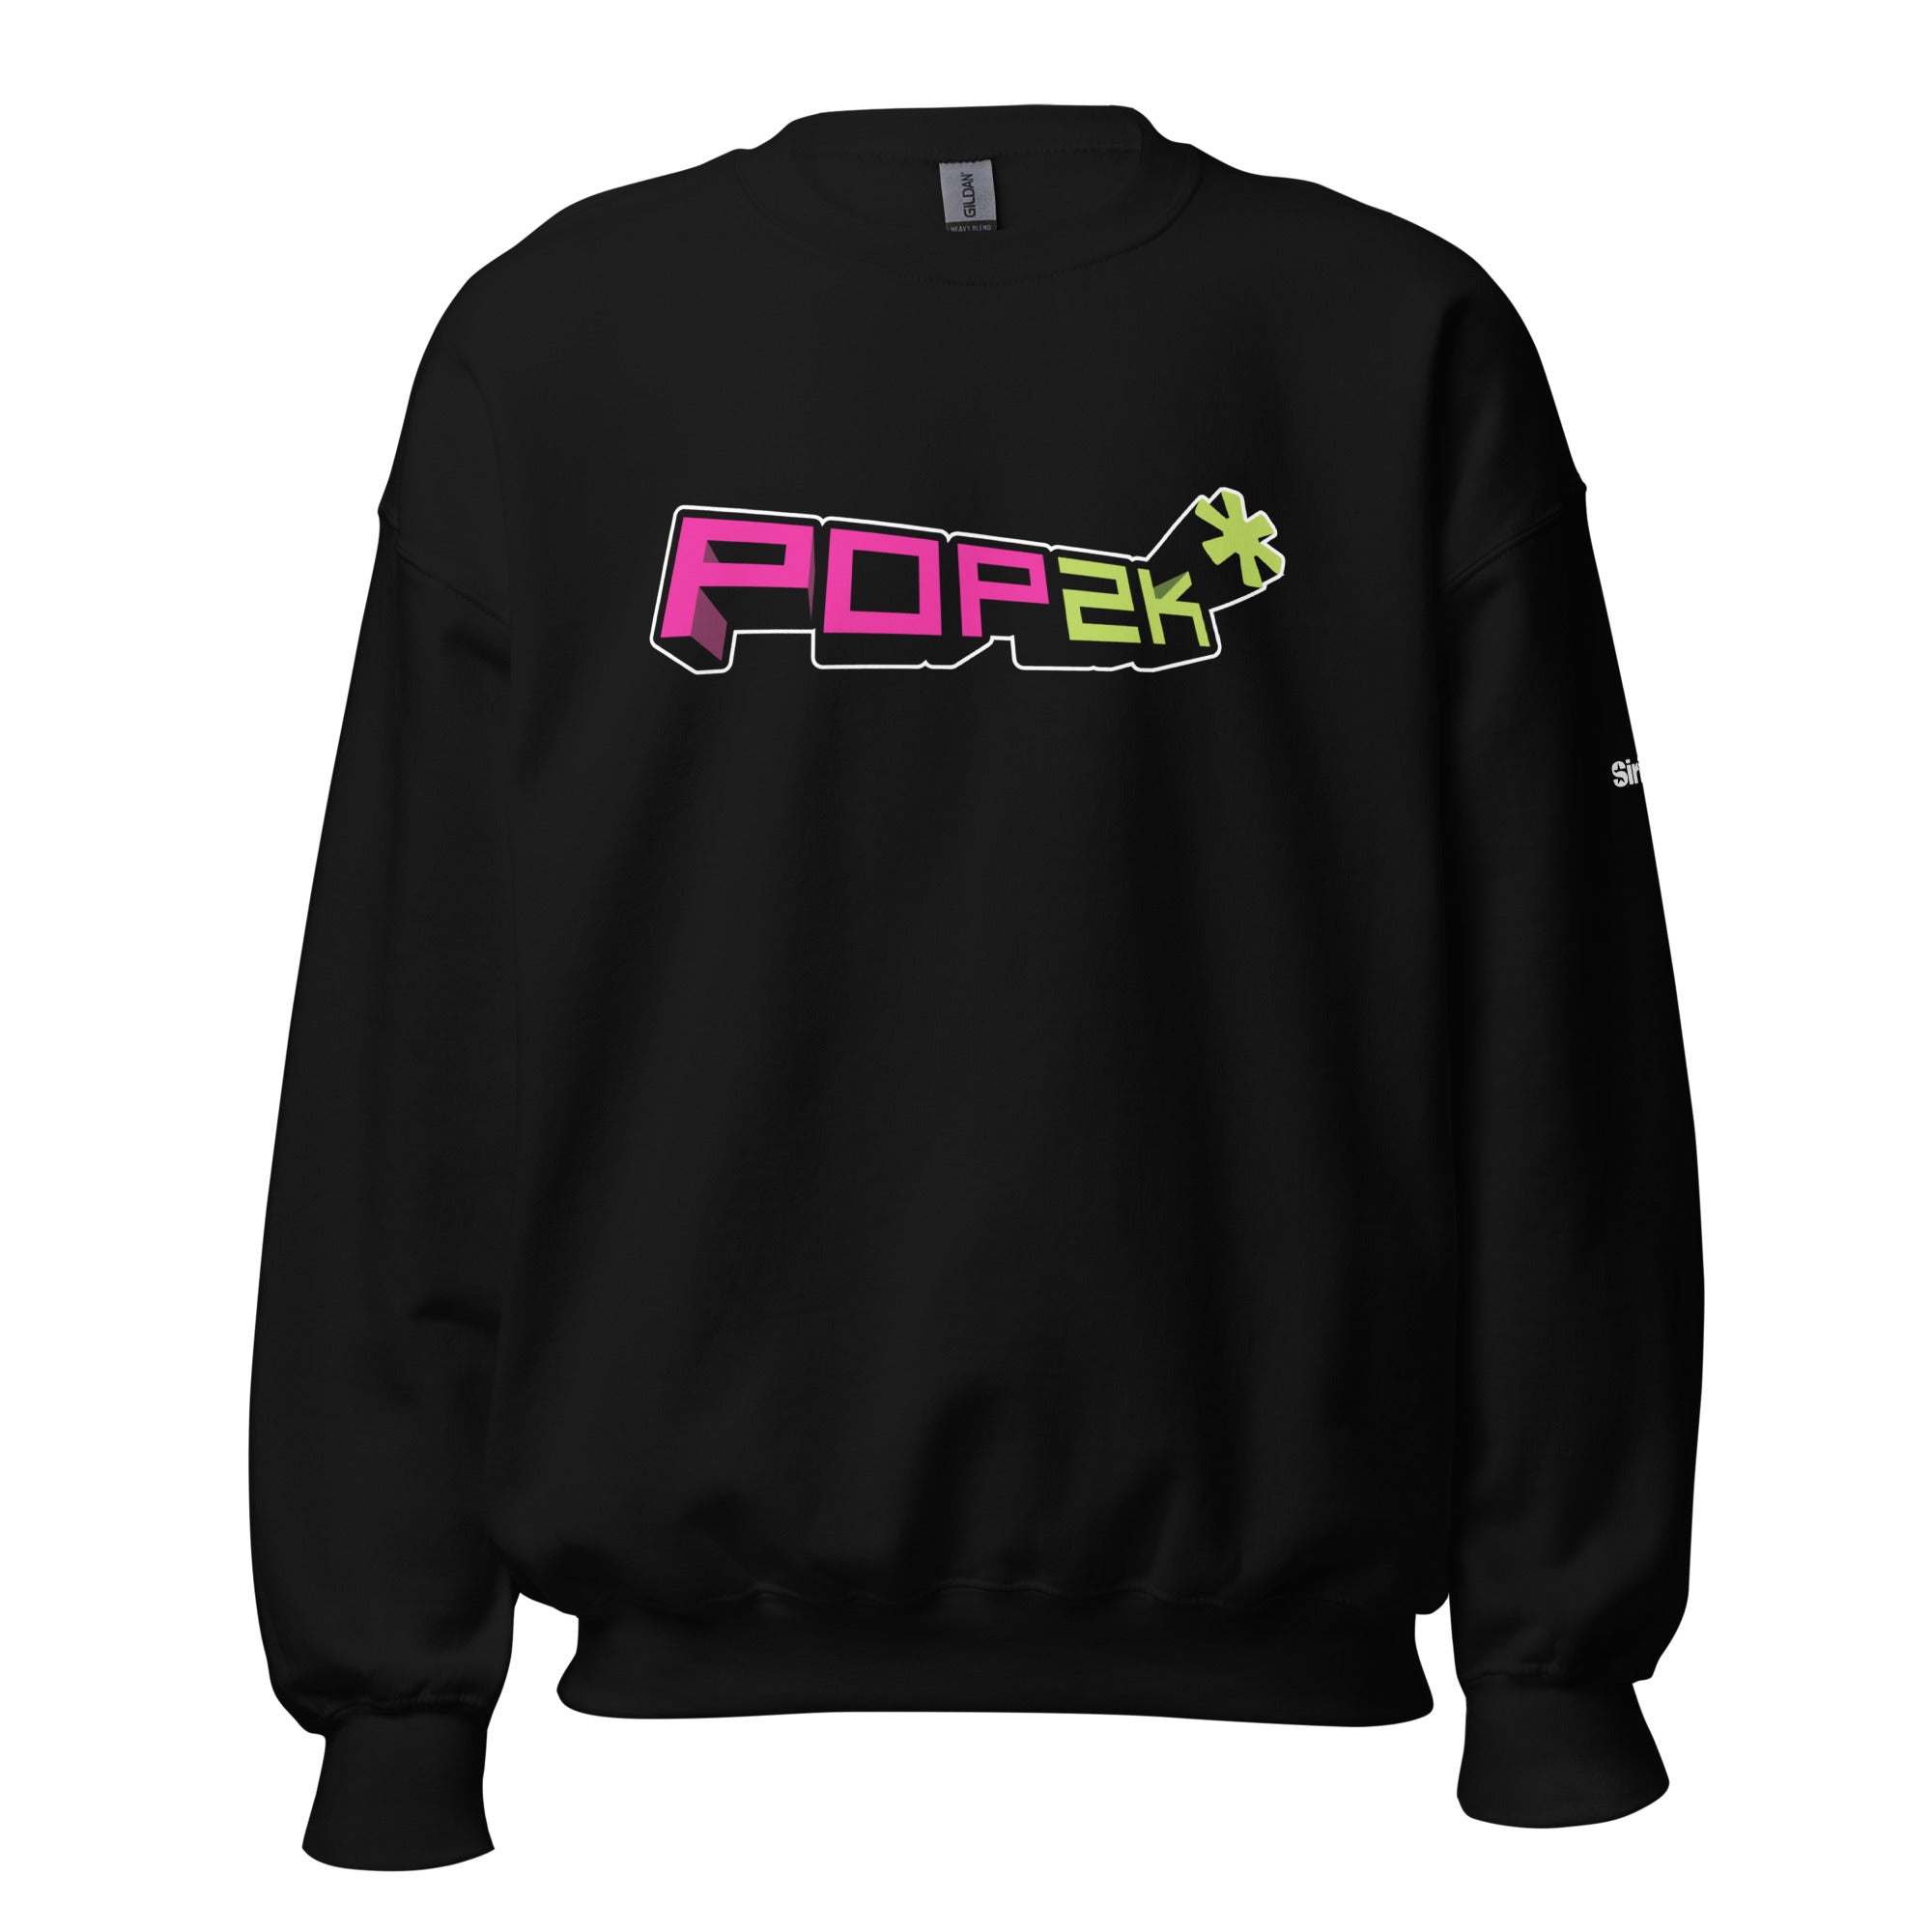 Pop 2k: Sweatshirt (Black)